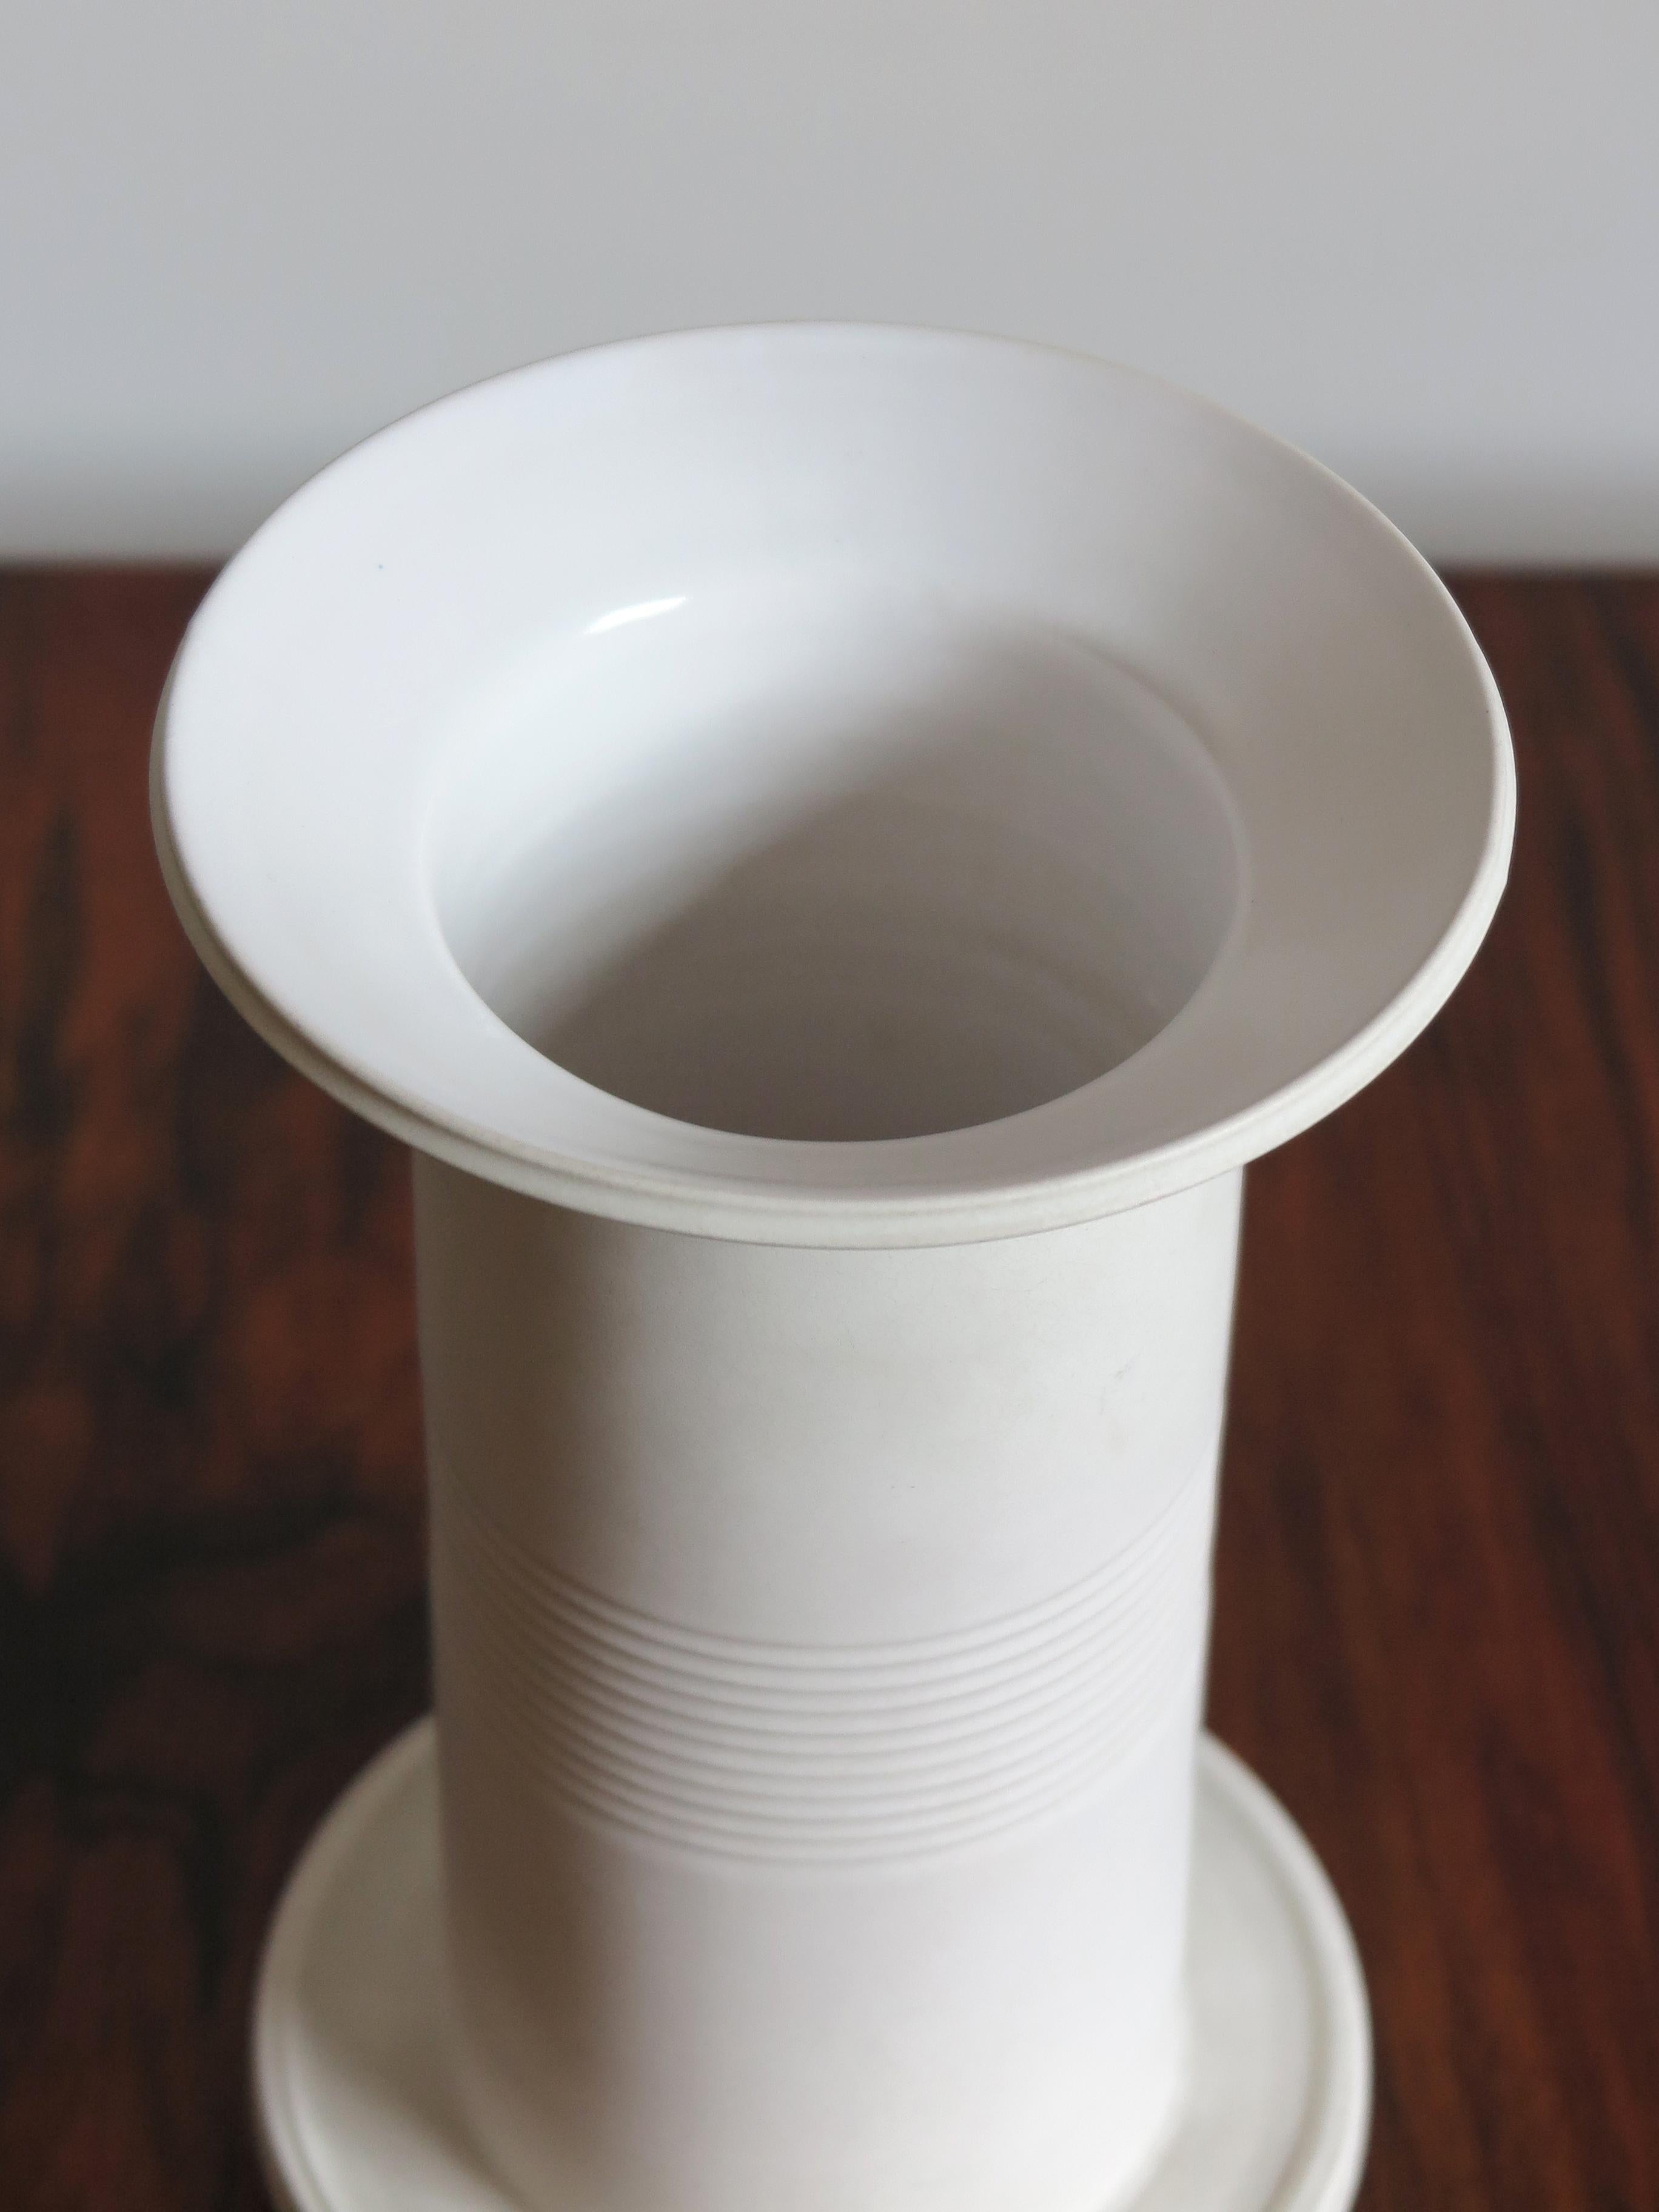 1960s Italian ceramic vase, designed by artist Franco Bucci for, marked on the bottom, Mid-Century Modern design.